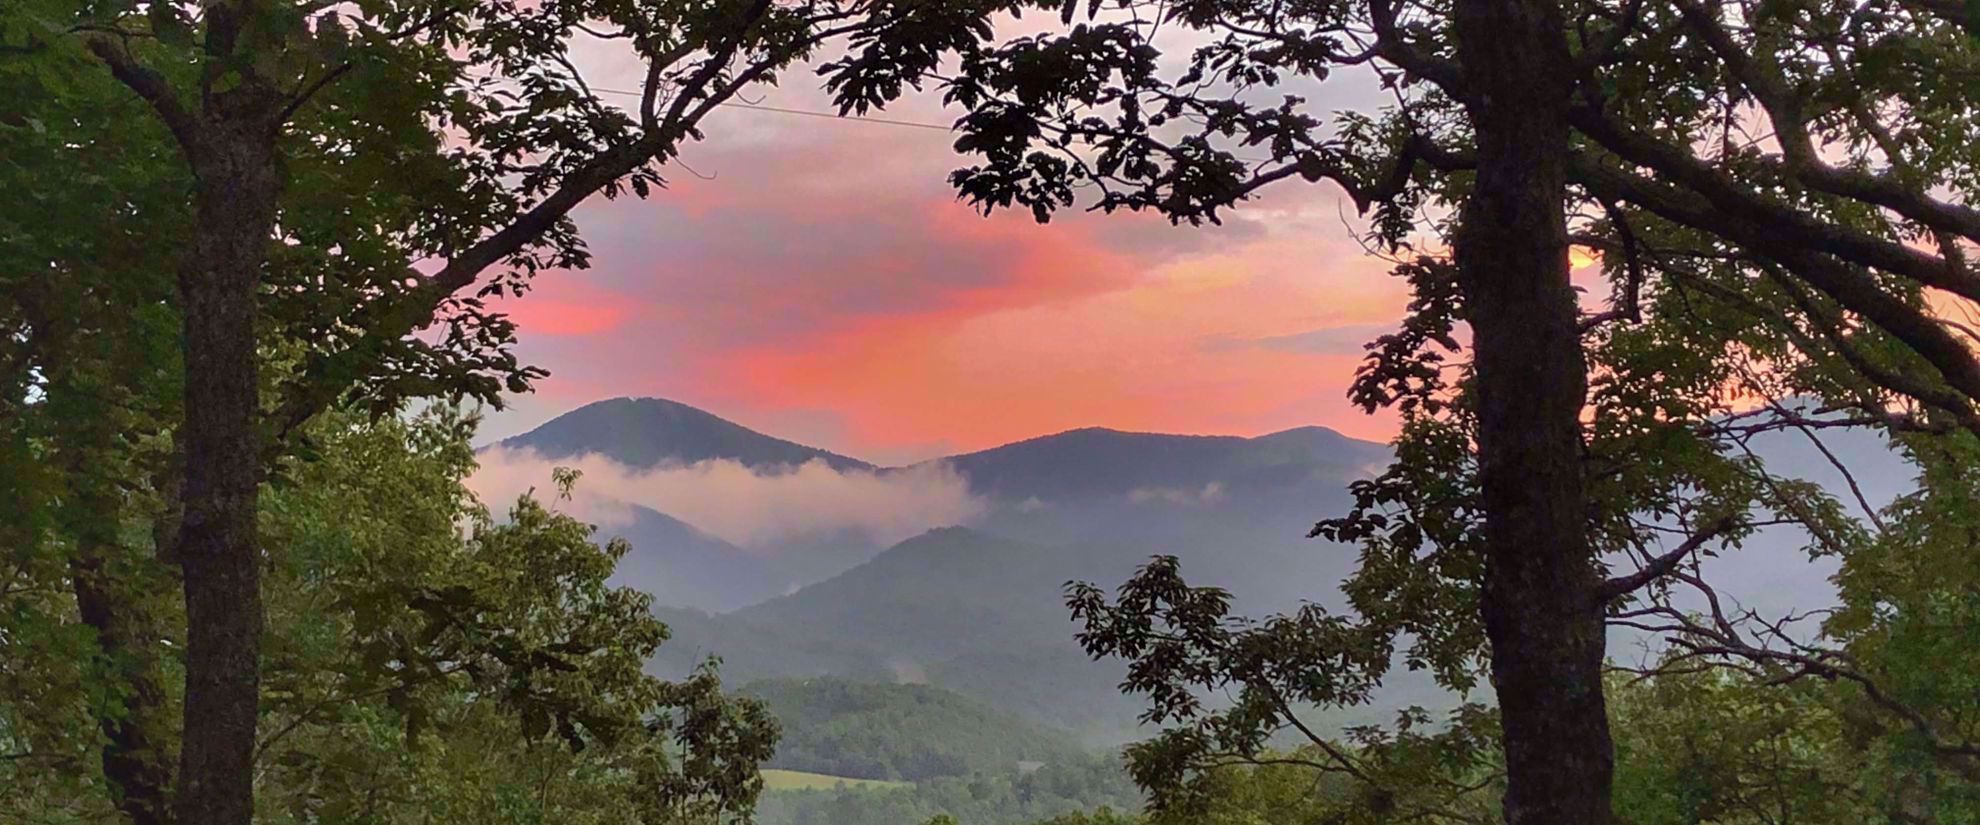 beautiful red sunset in appalachian mountains